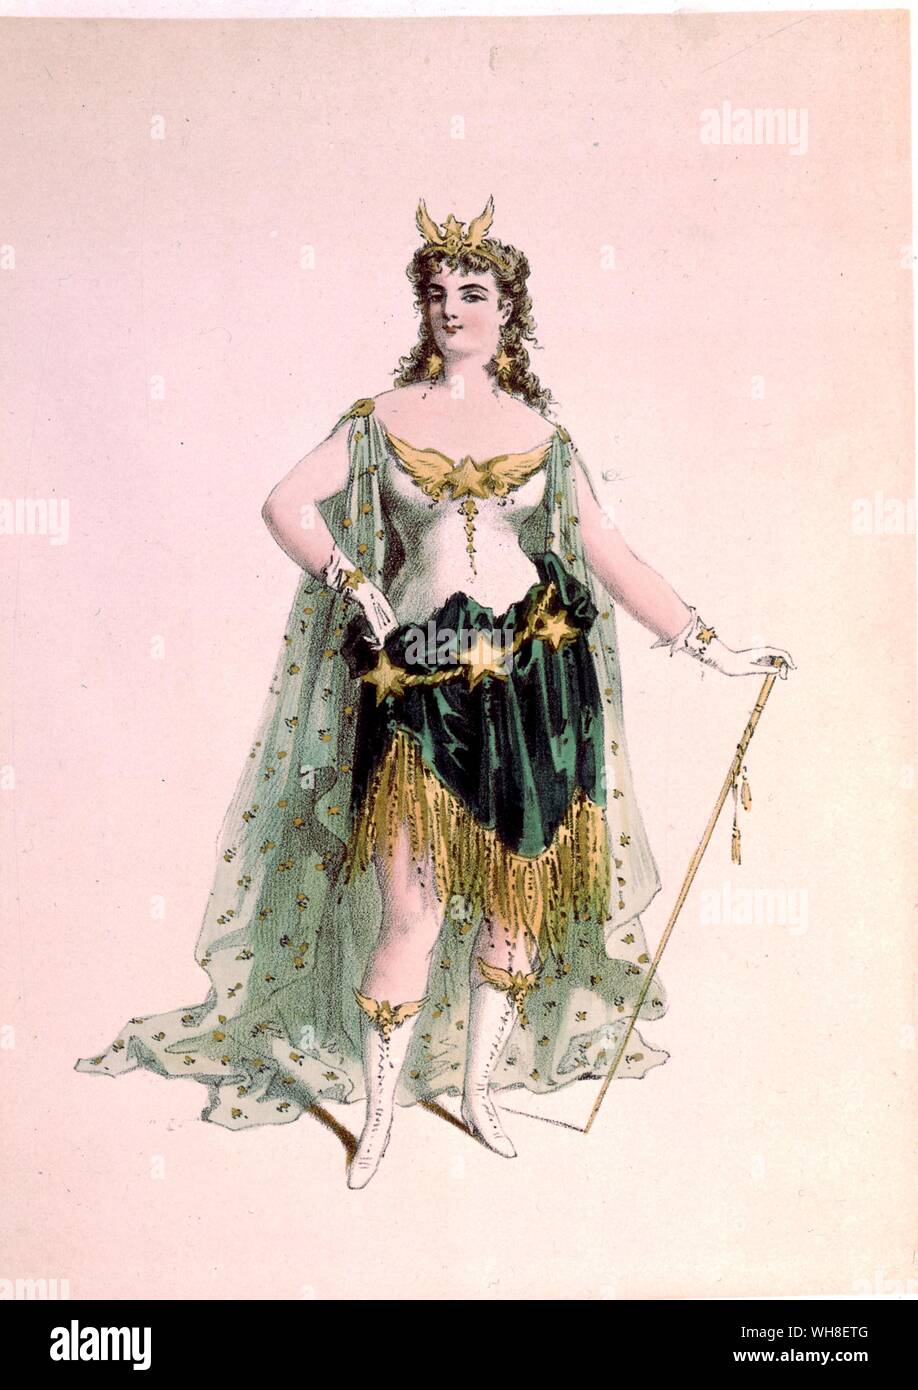 Mademoiselle Desclauzas (Miss Desclauzas) as Progress in La Lanterne (The Lantern), Henri Rochefort, 1868-69. Costumes des Theatres (Costumes of the theatres) 1860. Stock Photo